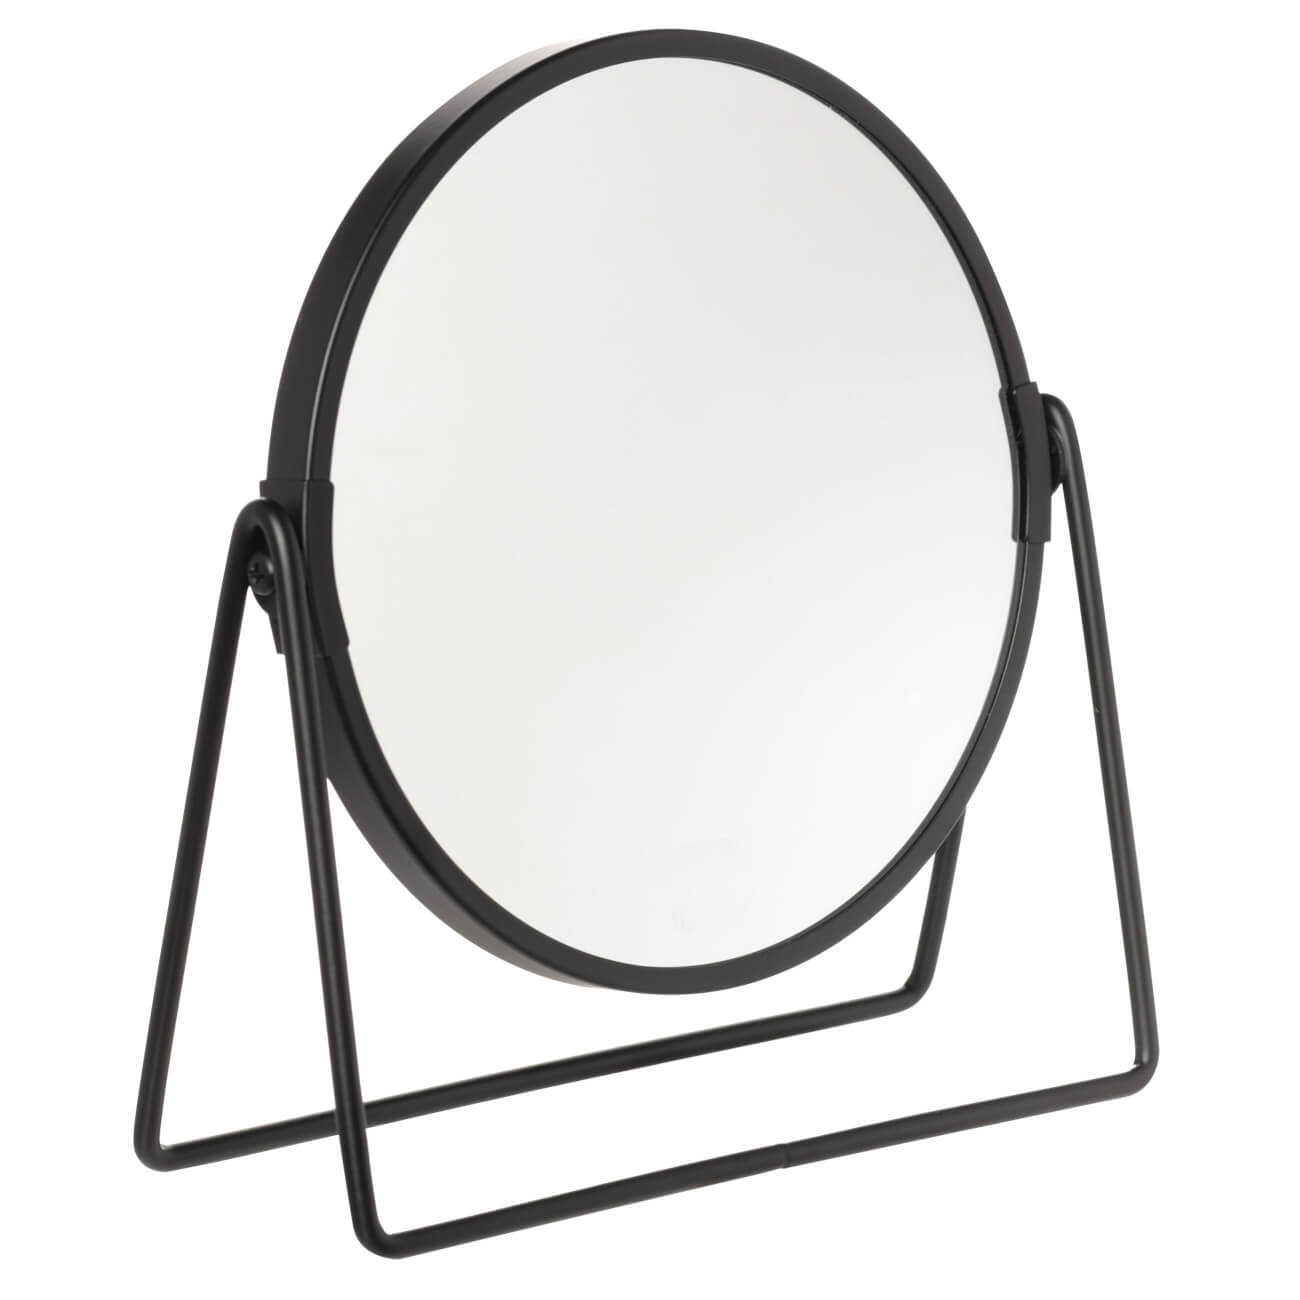 Зеркало настольное, 20 см, двустороннее, металл, круглое, черное, Graphic kuchenland зеркало настольное 17 см двустороннее на ножке металл круглое fantastic